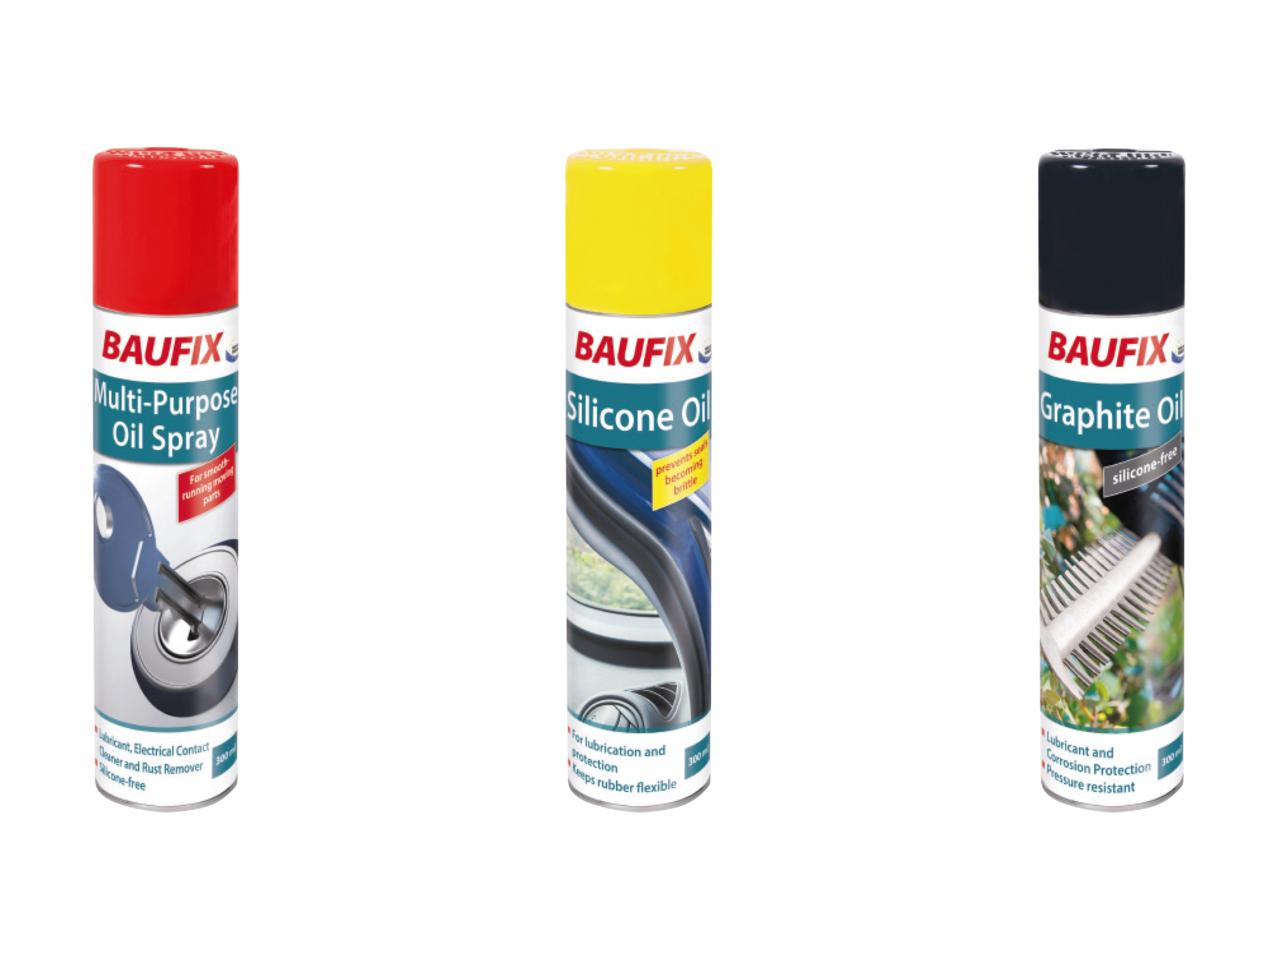 BAUFIX 300ml Multi-Purpose Oil Sprays